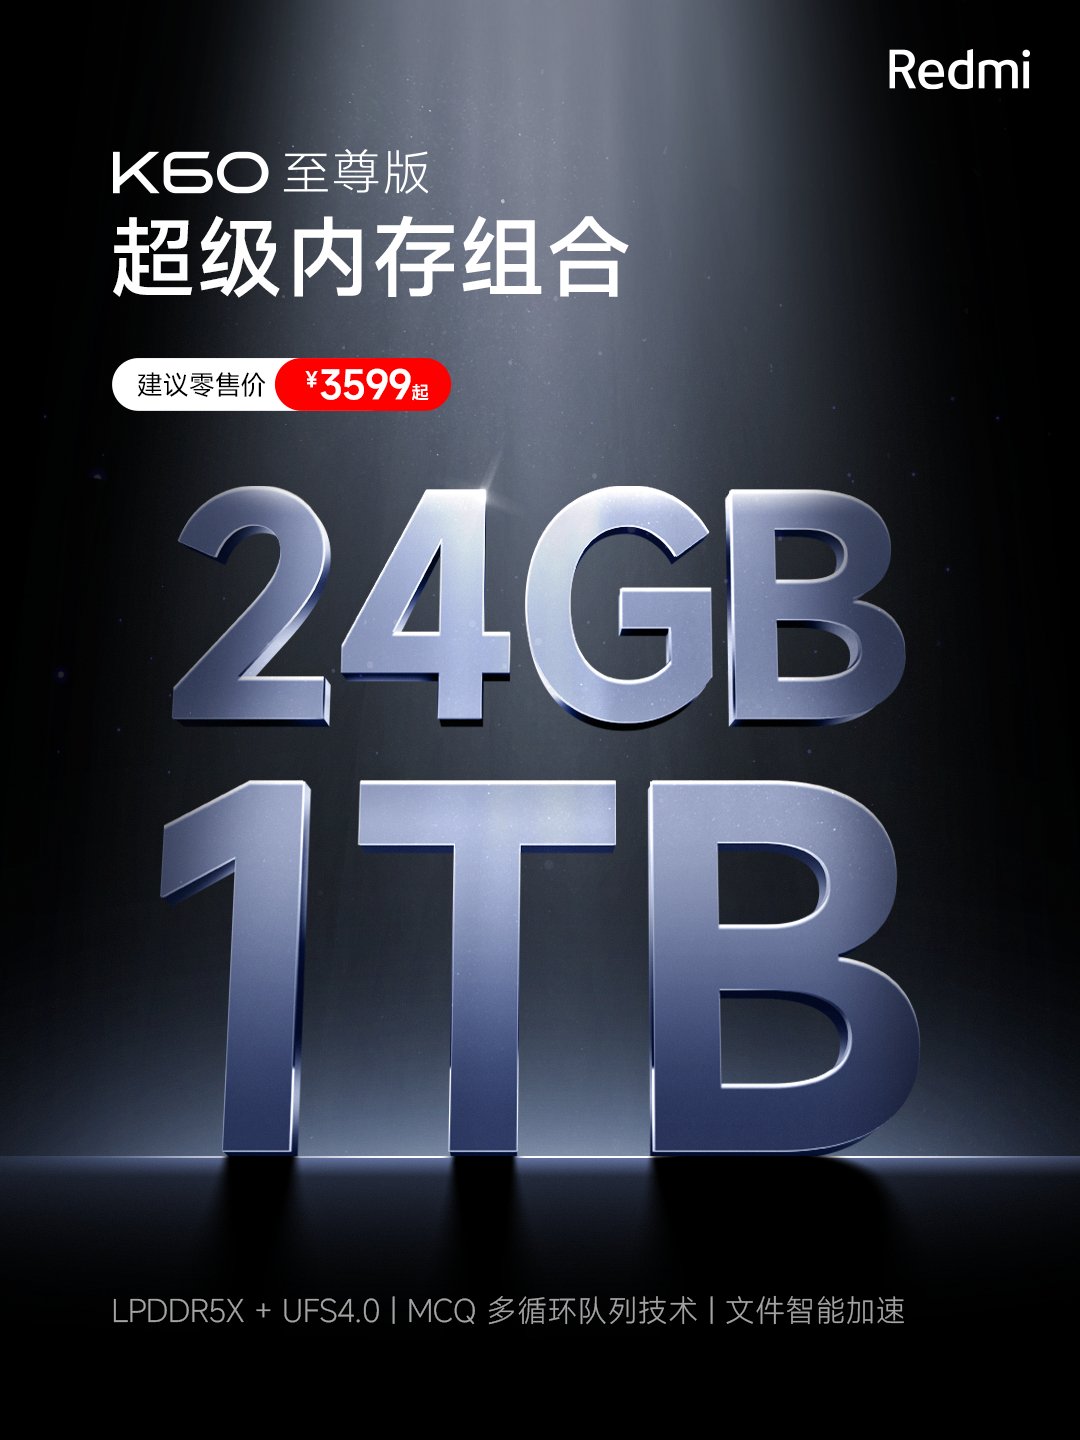 Redmi K60 Ultra 24GB RAM + 1TB storage variant goes on sale